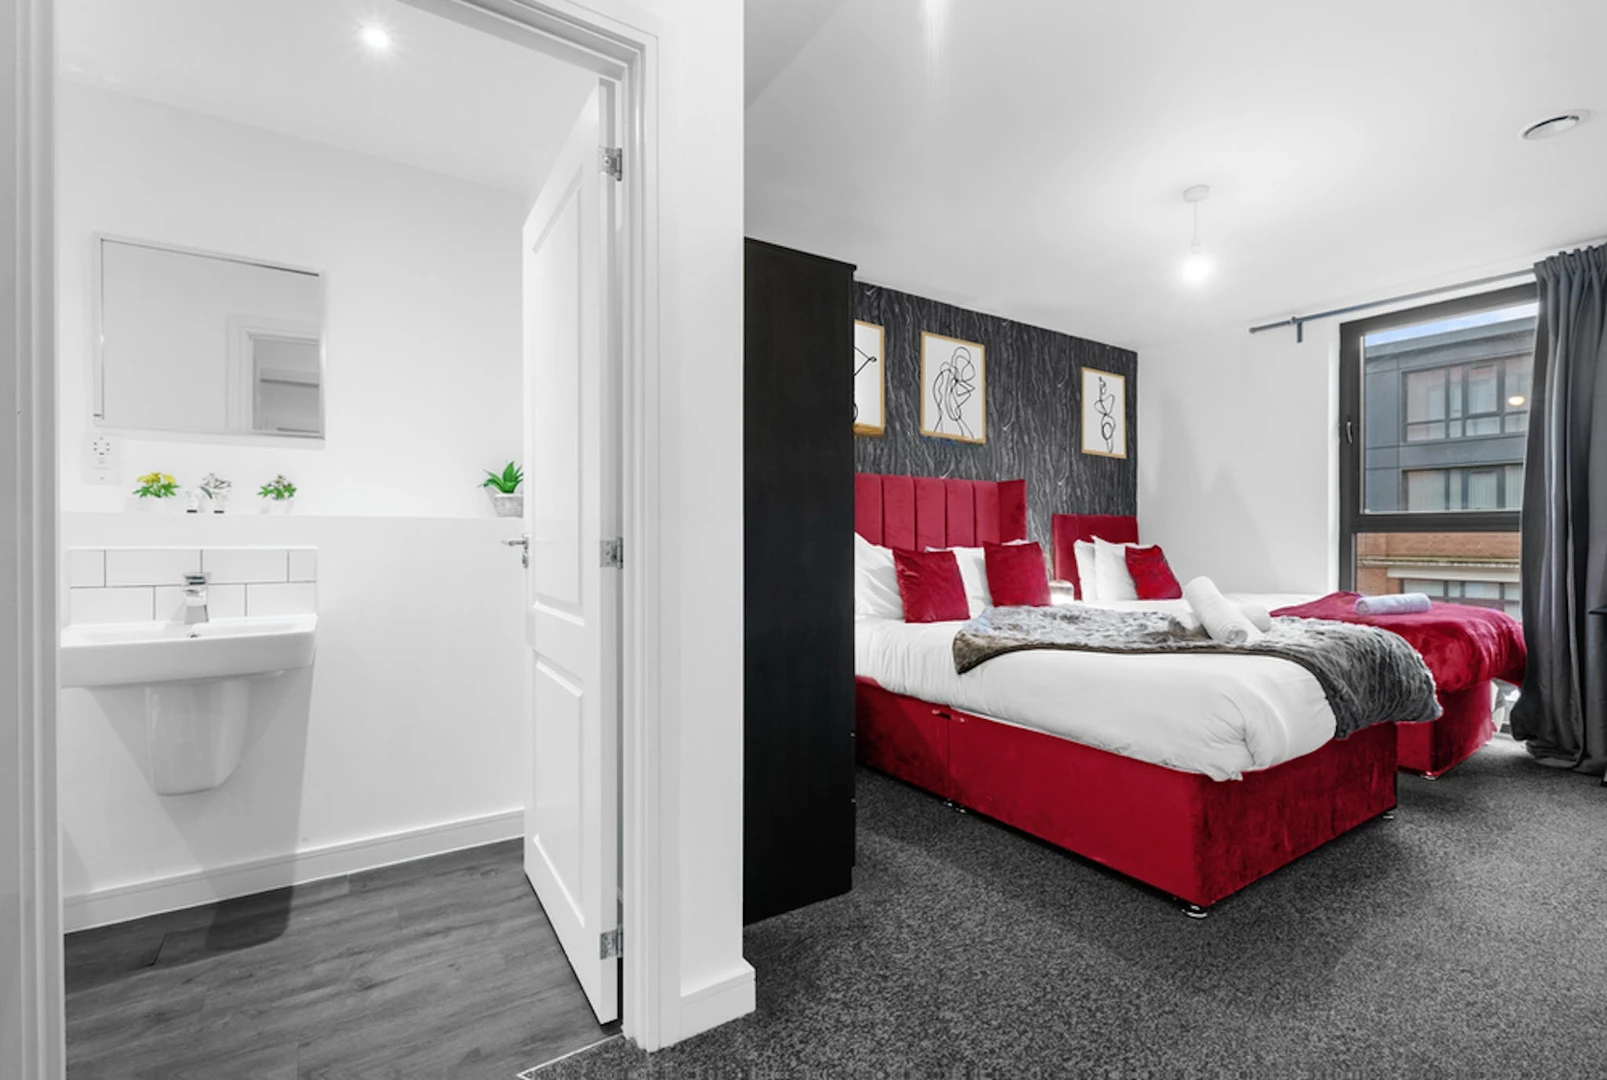 Two bedroom accommodation in birmingham